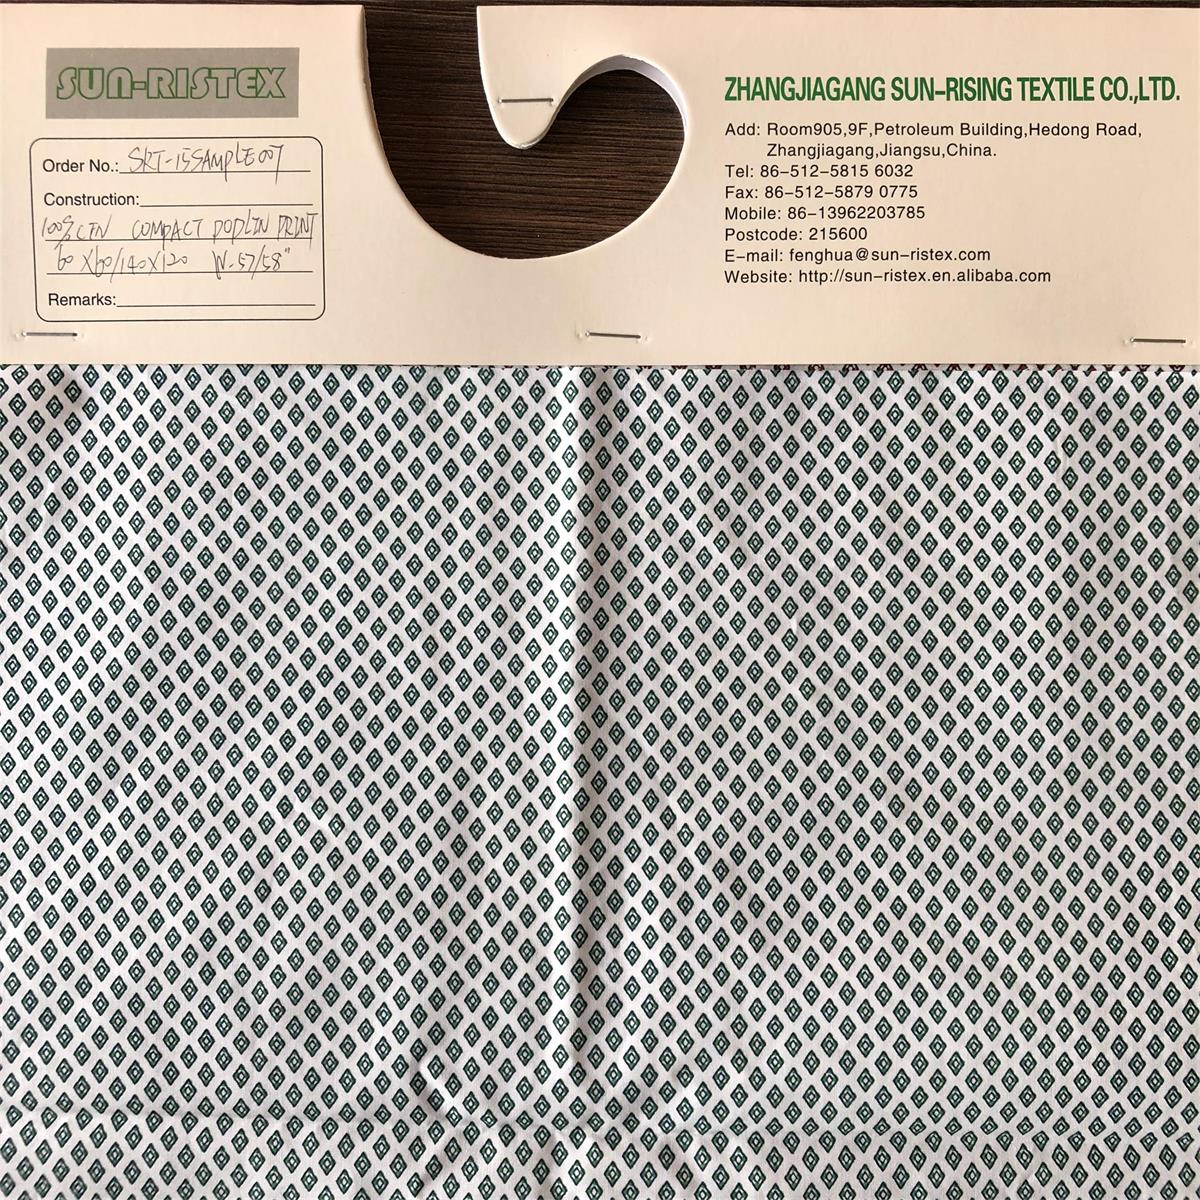 Sun-rising Textile Cotton Printed fabric 60S compact yarn soft comfortable men's shirts 100% cotton poplin printed shirts fabric